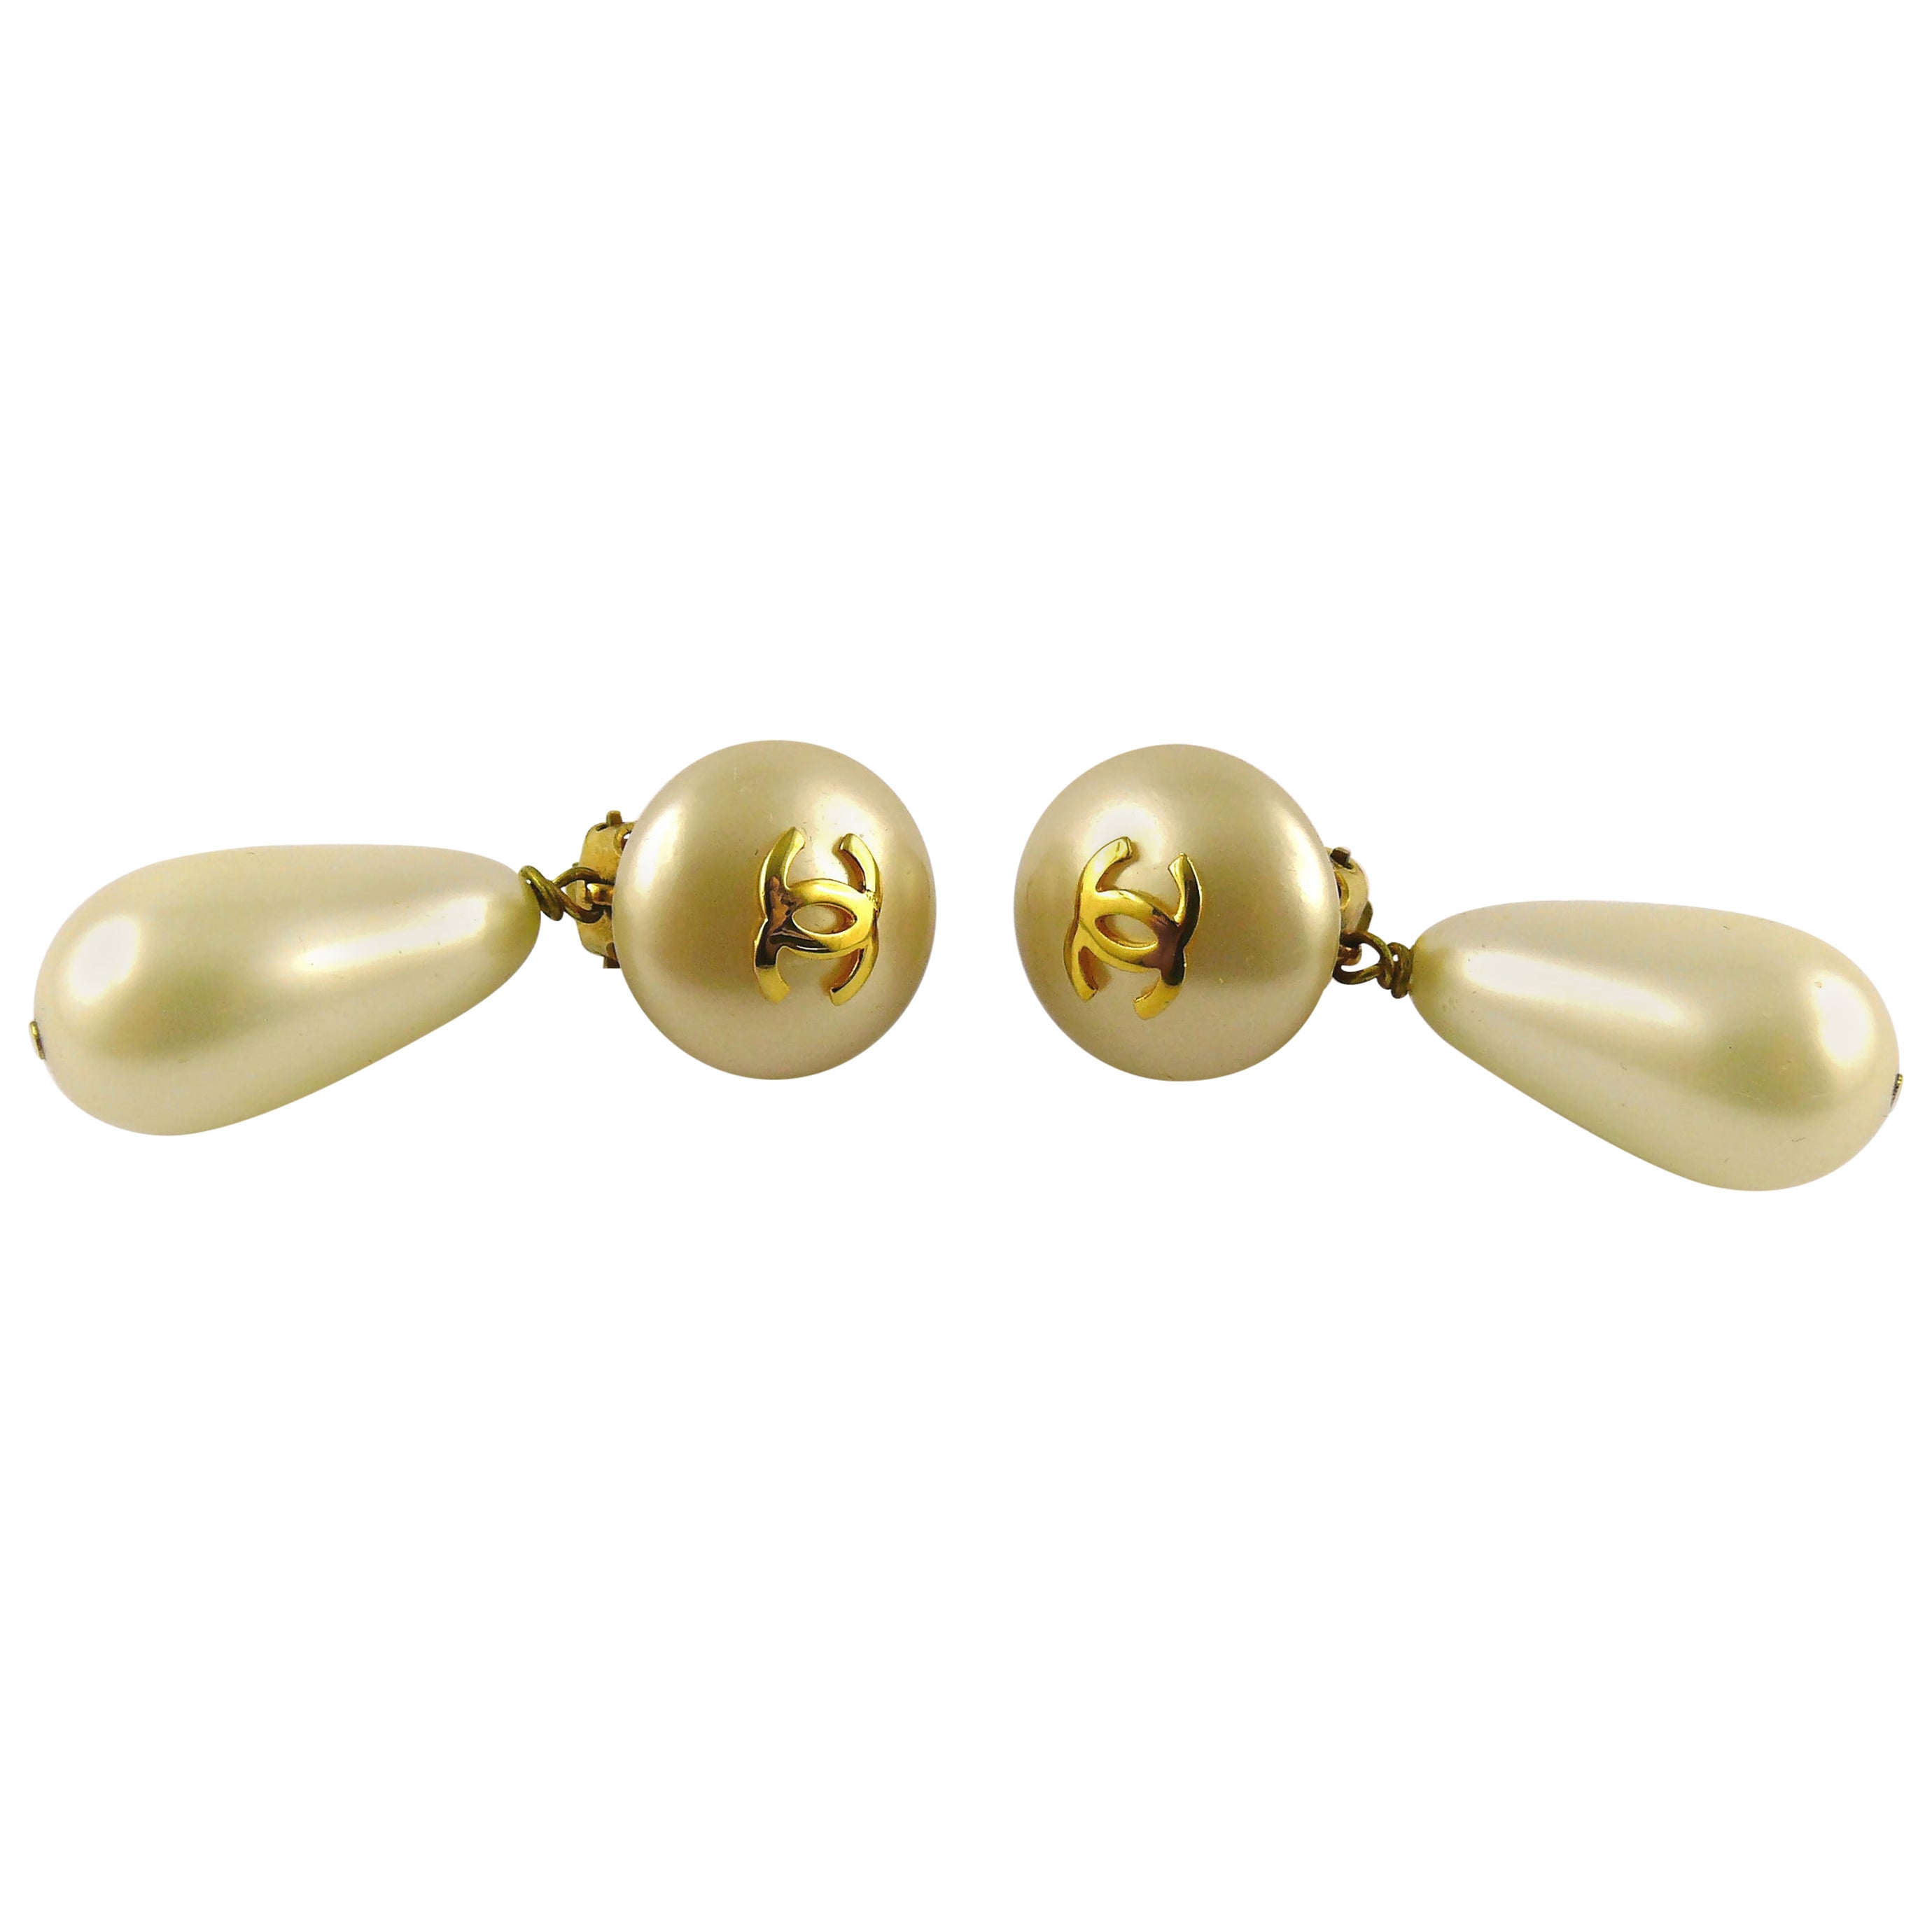 Chanel Vintage Pearl Drop Dangling Earrings